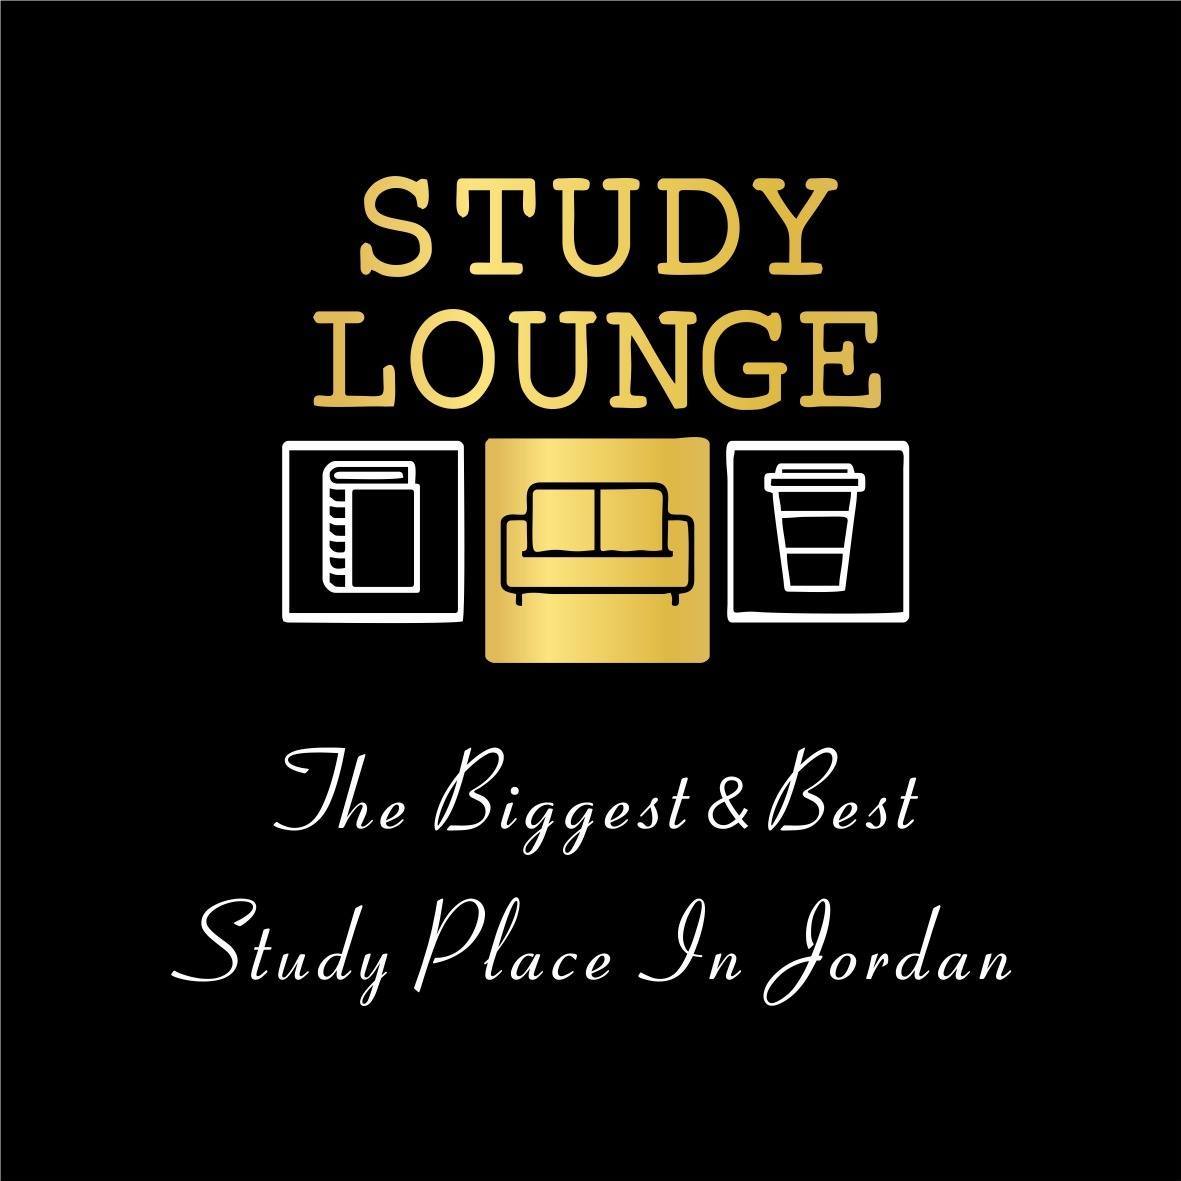 The Study Lounge